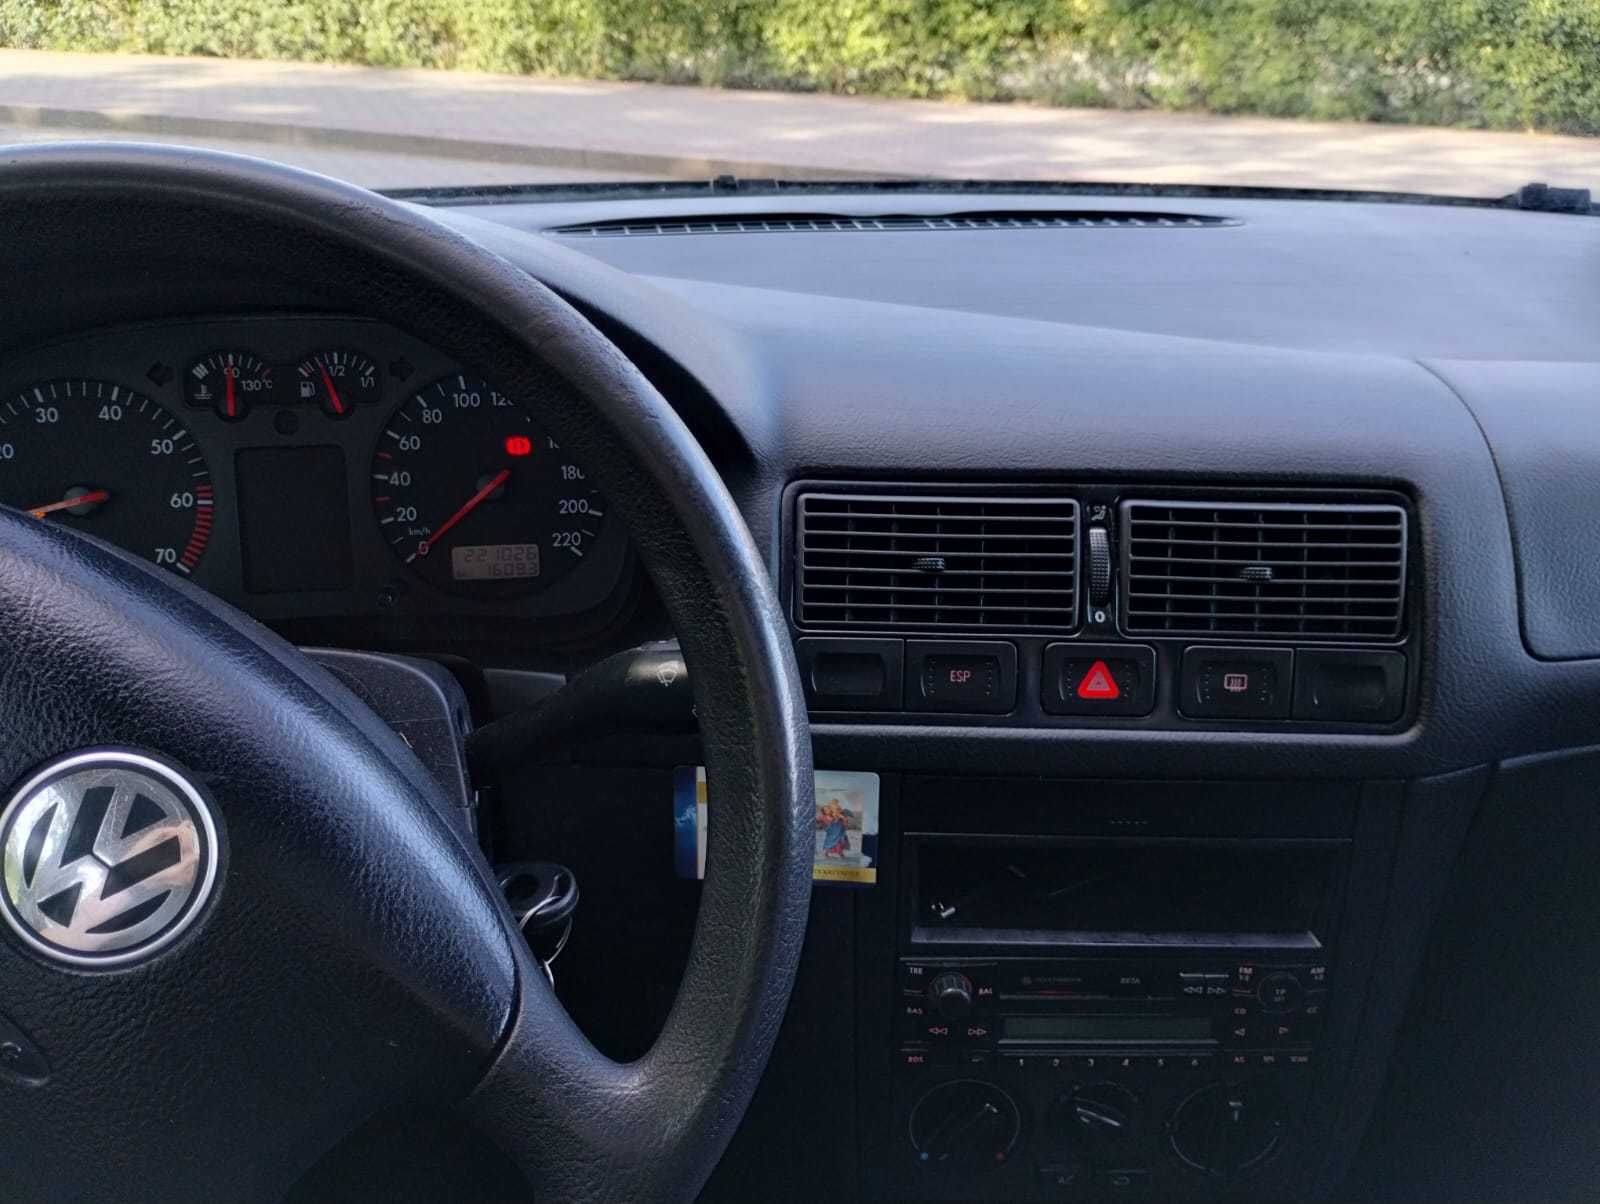 VW  Golf 1,4 16 v benzyna 95